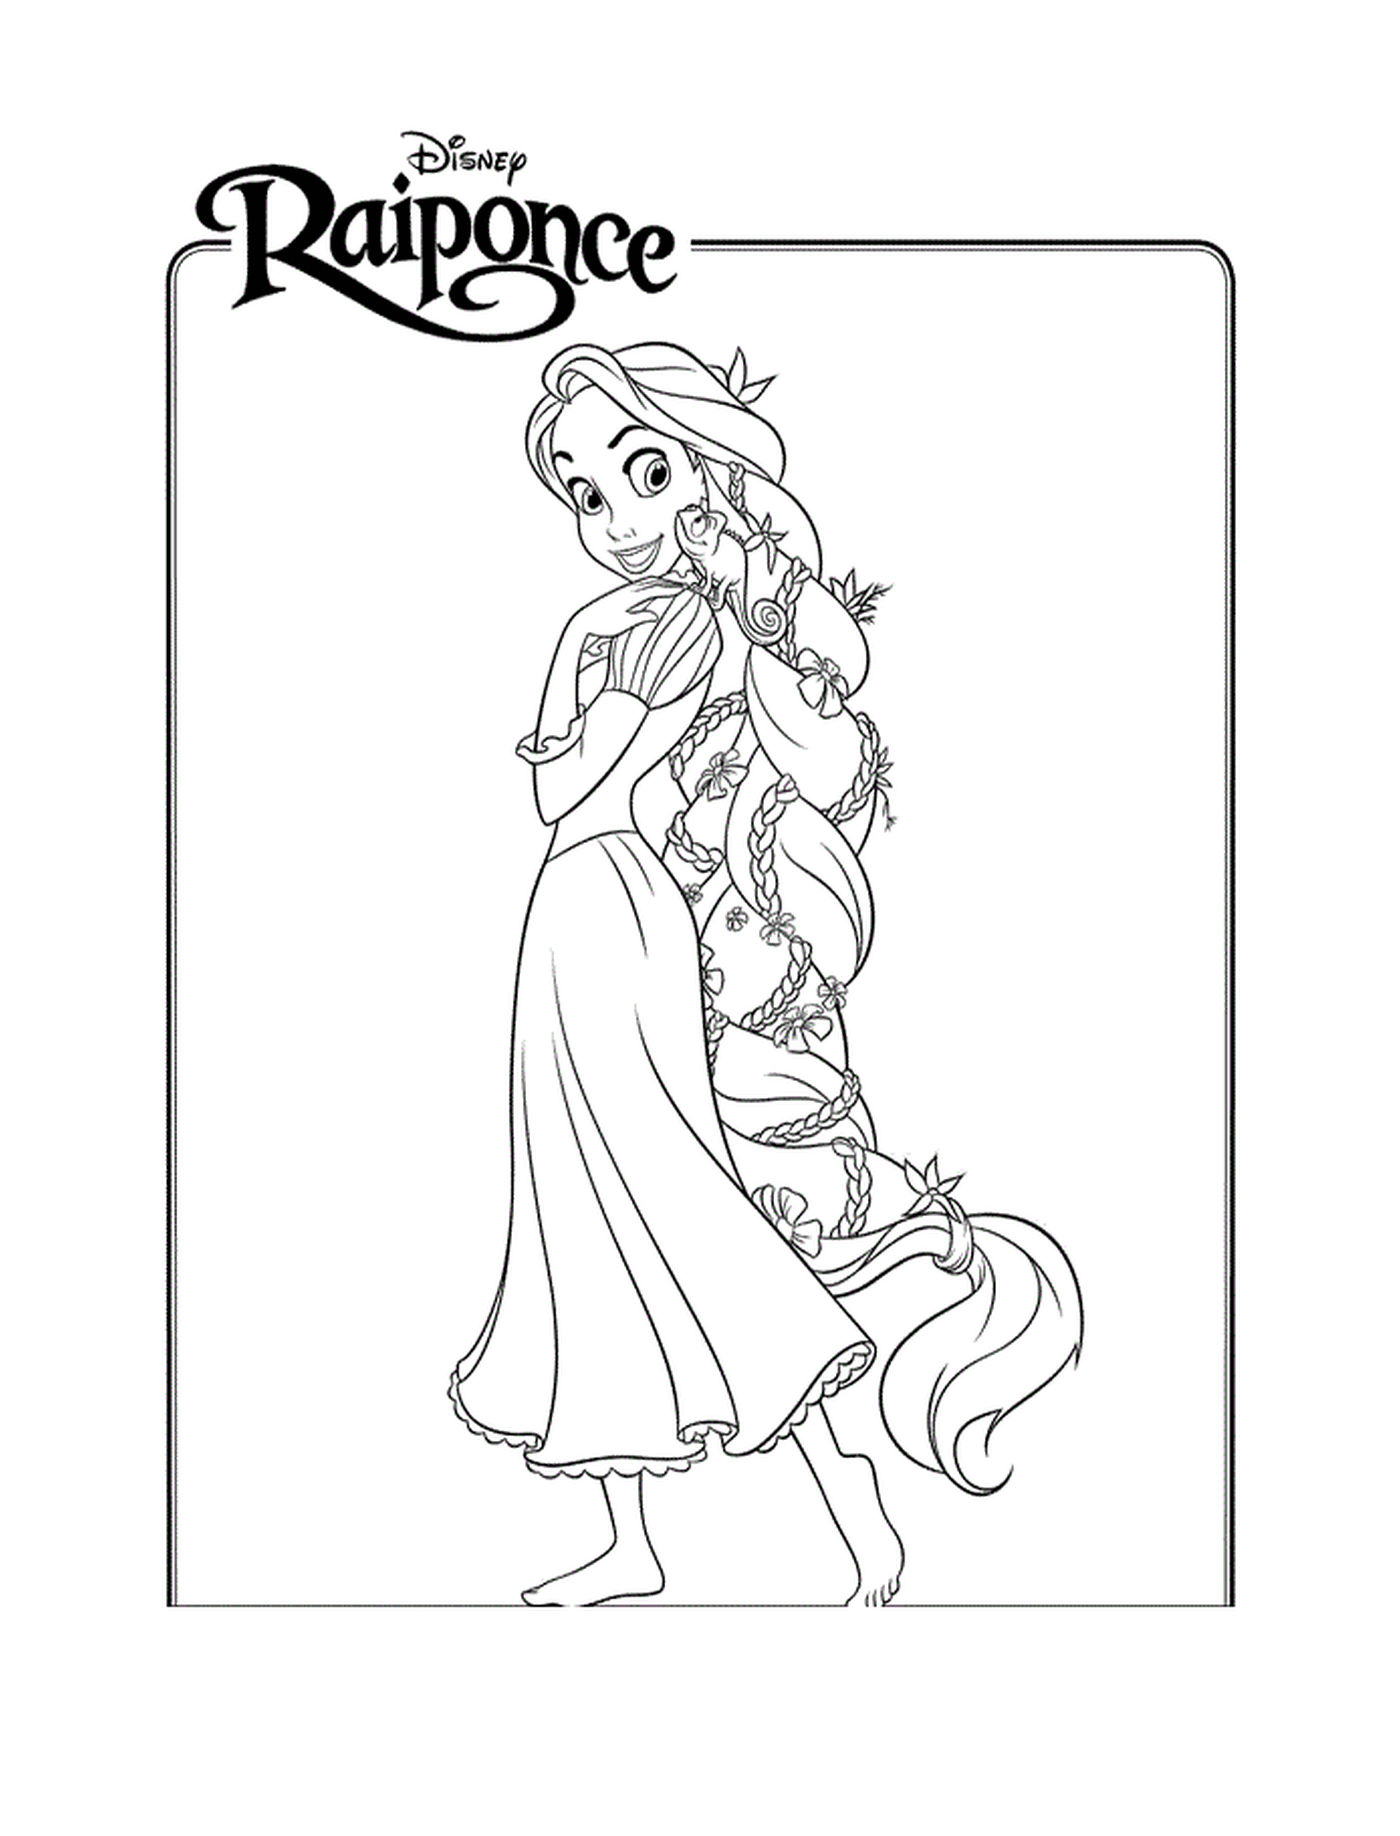  Raiponce Disney, a long-haired girl 